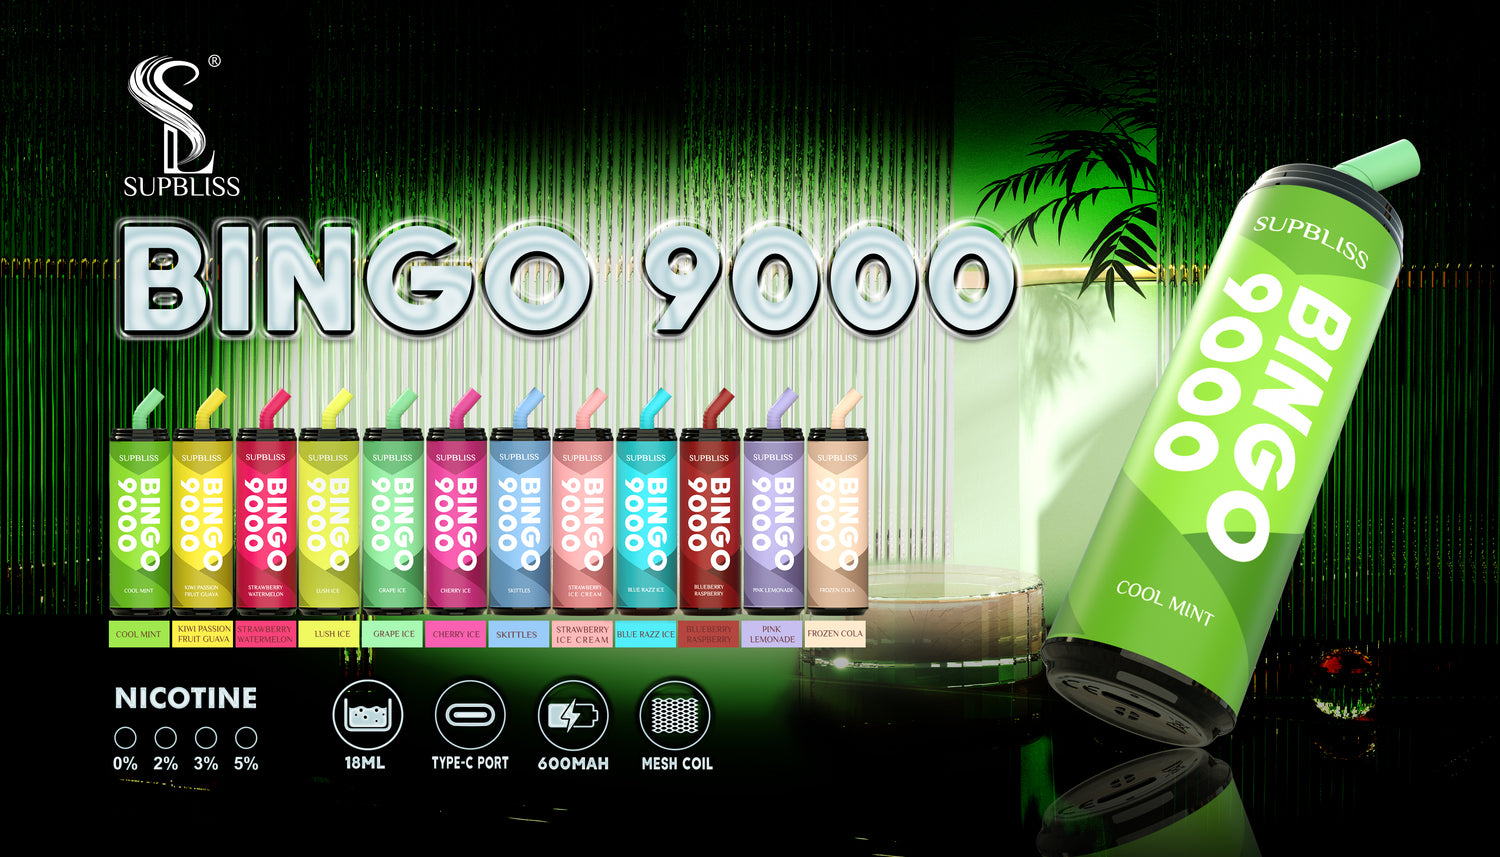 Bingo 9000 poster